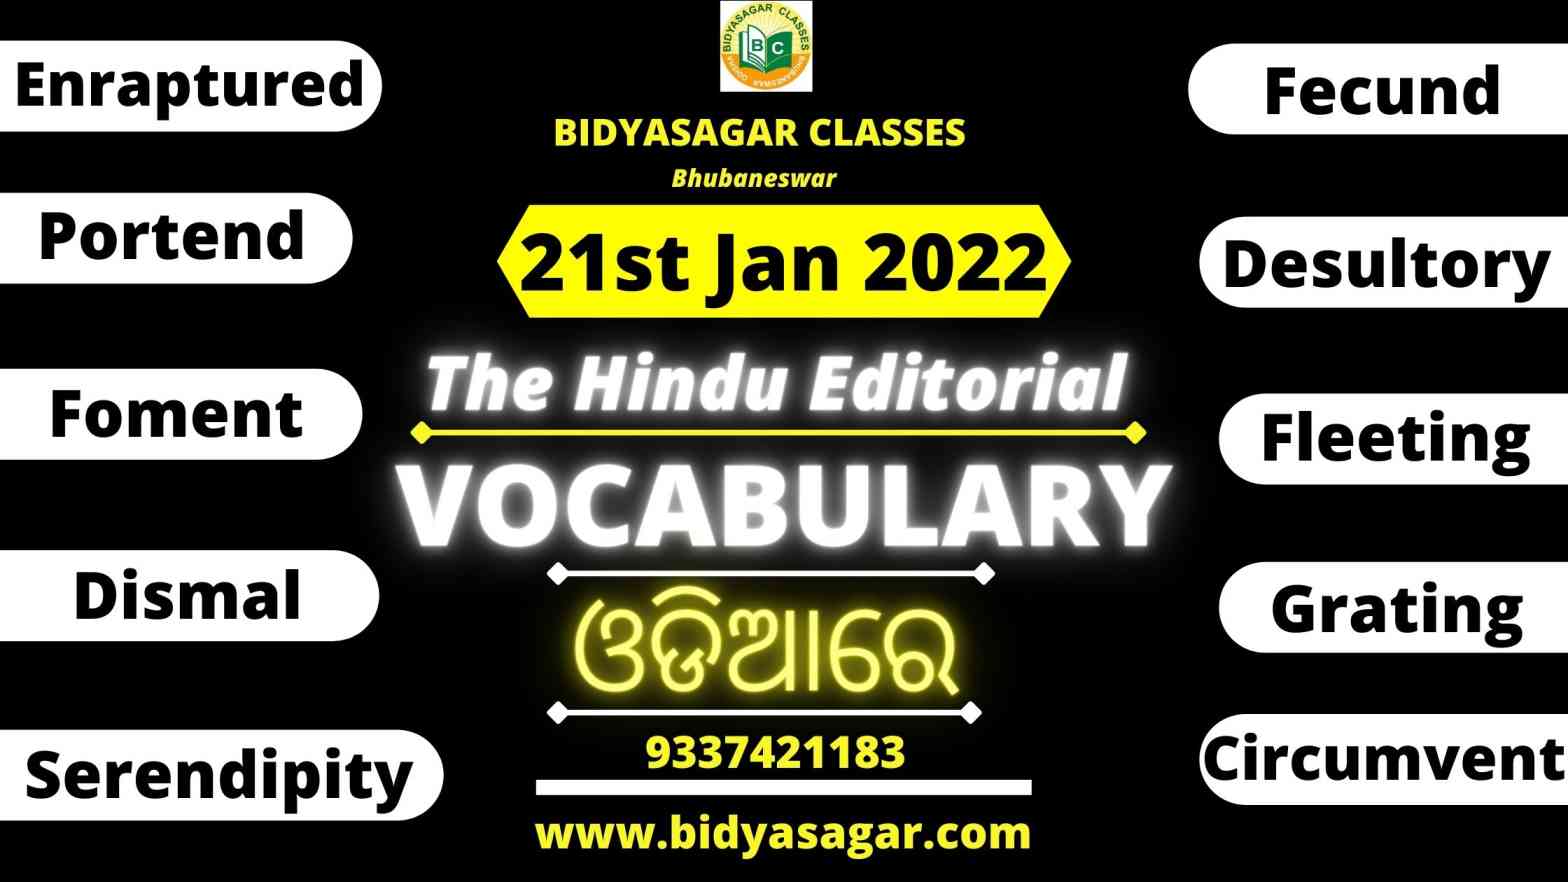 The Hindu Editorial Vocabulary of 21st January 2022